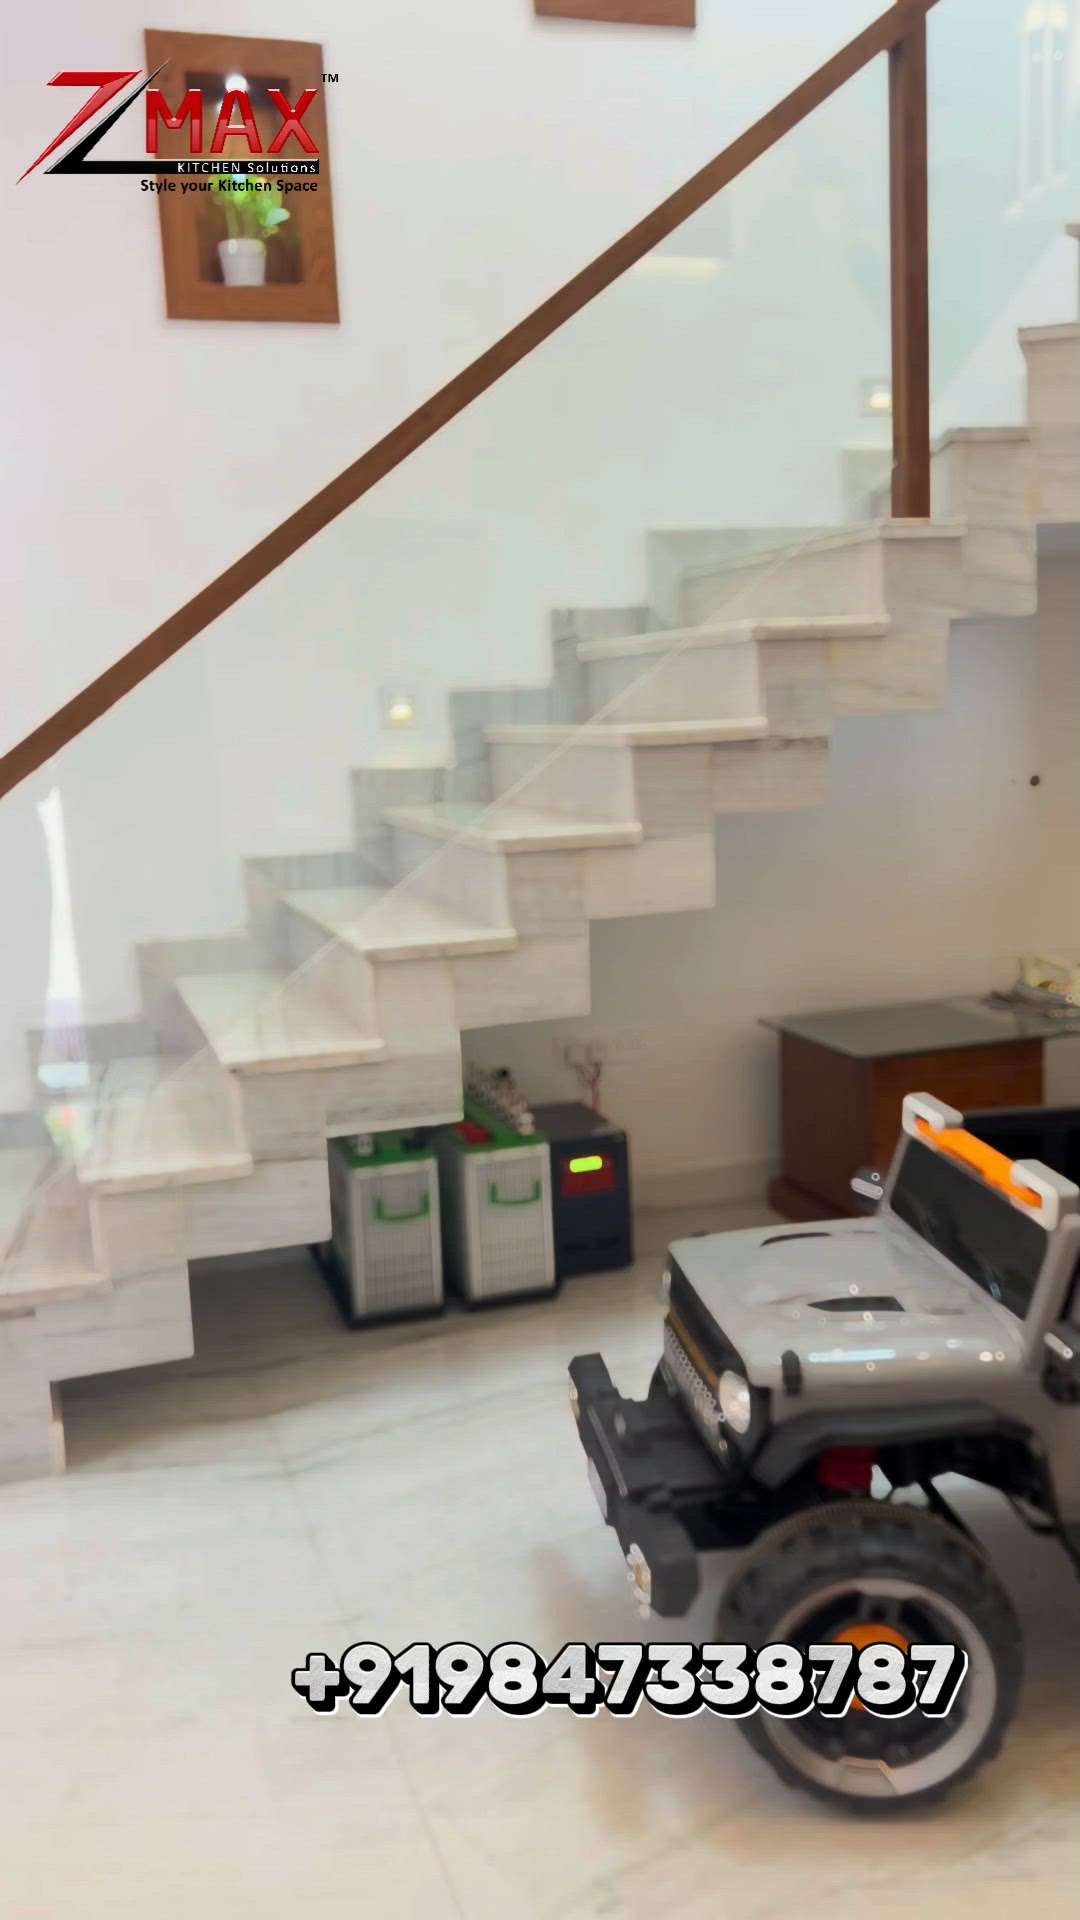 #StaircaseDecors ##ZMaxStairSolutions #elevateyourspace❤️ #stairs #stairway #homedecor #home #house #wood #steel #aluminium #stairdesign #stairwalkers #stairworkout #stairwork #kondotty #kozhikode #ramanattukara #zmax #post #newpost #stairwell #design #ushapedstairs #spiralstairs #splitstaircase #lshapestairs #straightstair